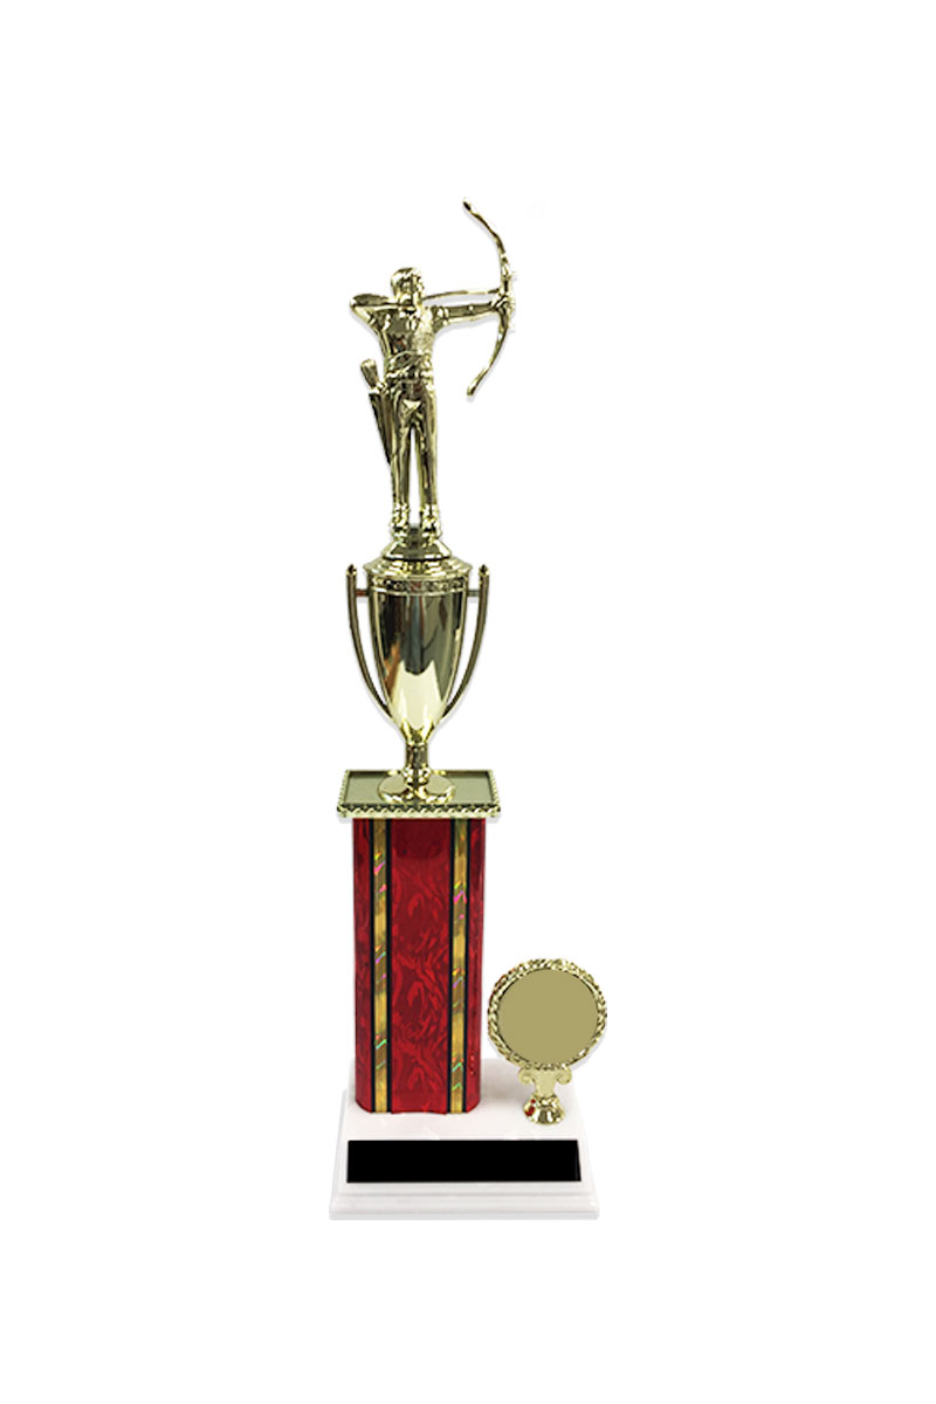 NASP® 1 Post Trophy